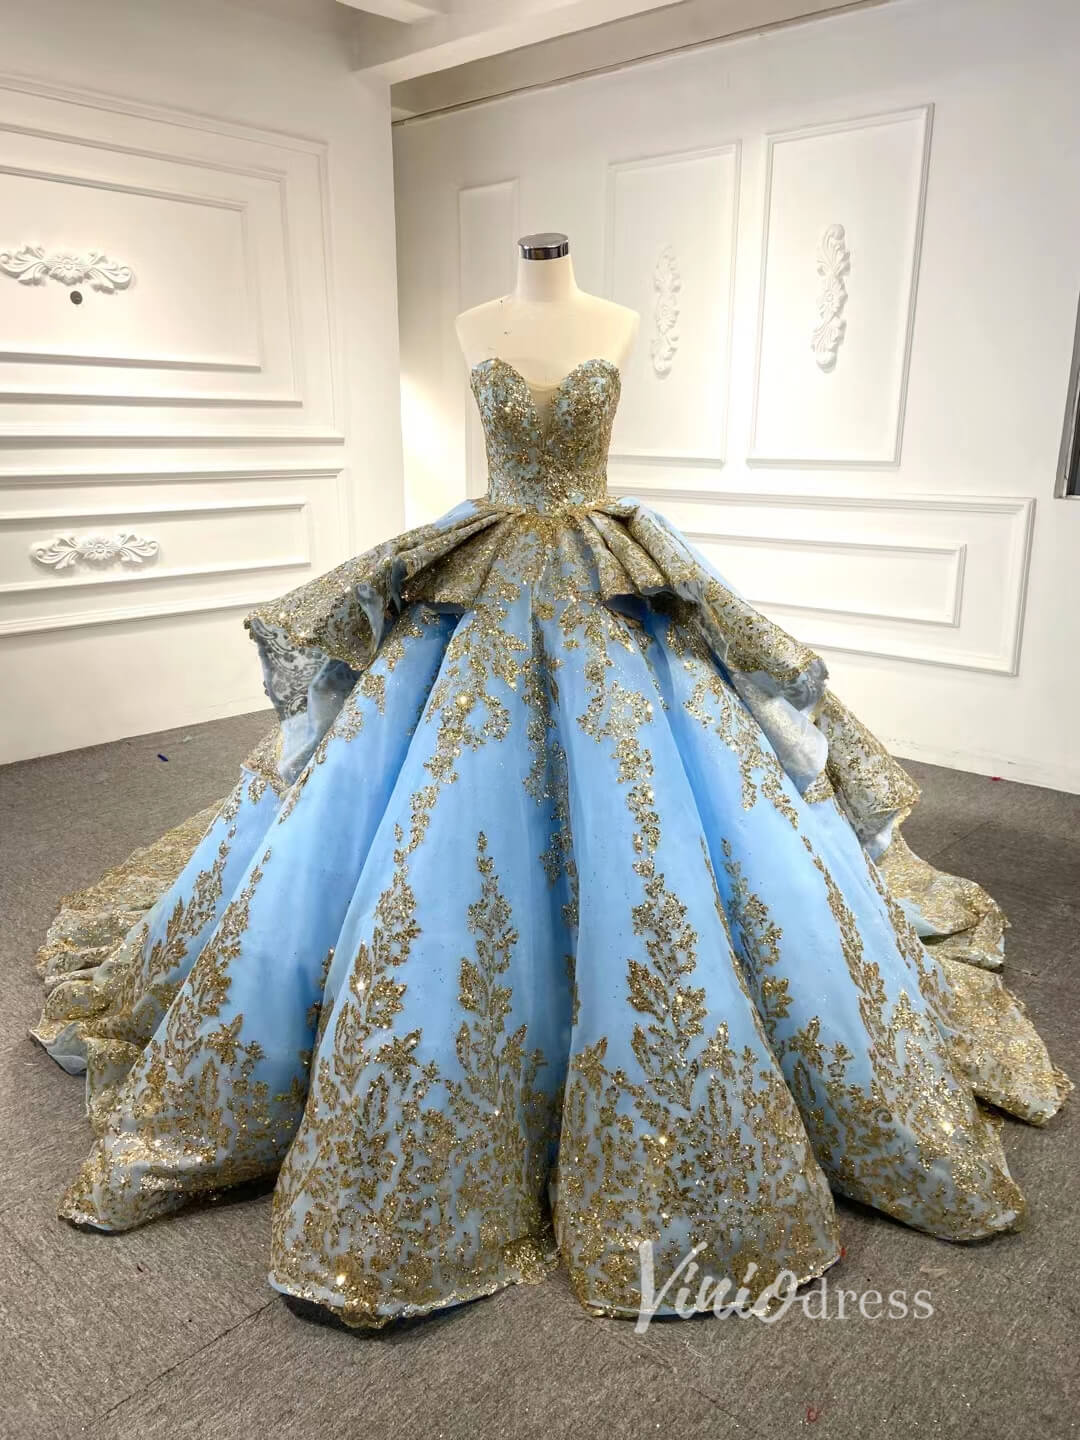 Convertible Blue Ball Gown Wedding Dress Removable Train Quinceanera Dresses 66949-wedding dresses-Viniodress-Blue-Custom Size-Viniodress